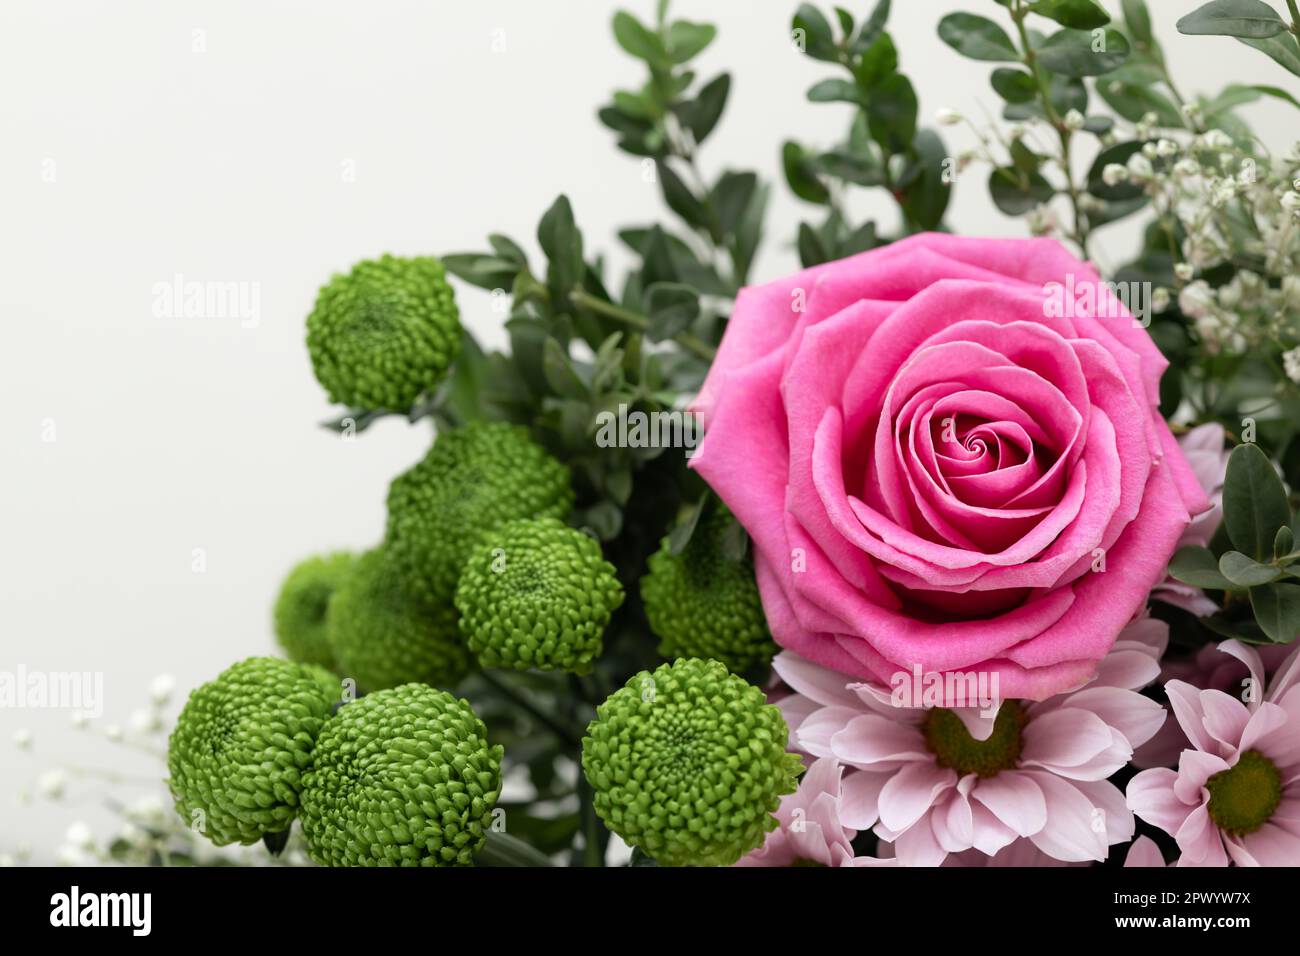 Chrysanthemum Daisy Rose (Mum, Daisy Style Chrysanthemum)